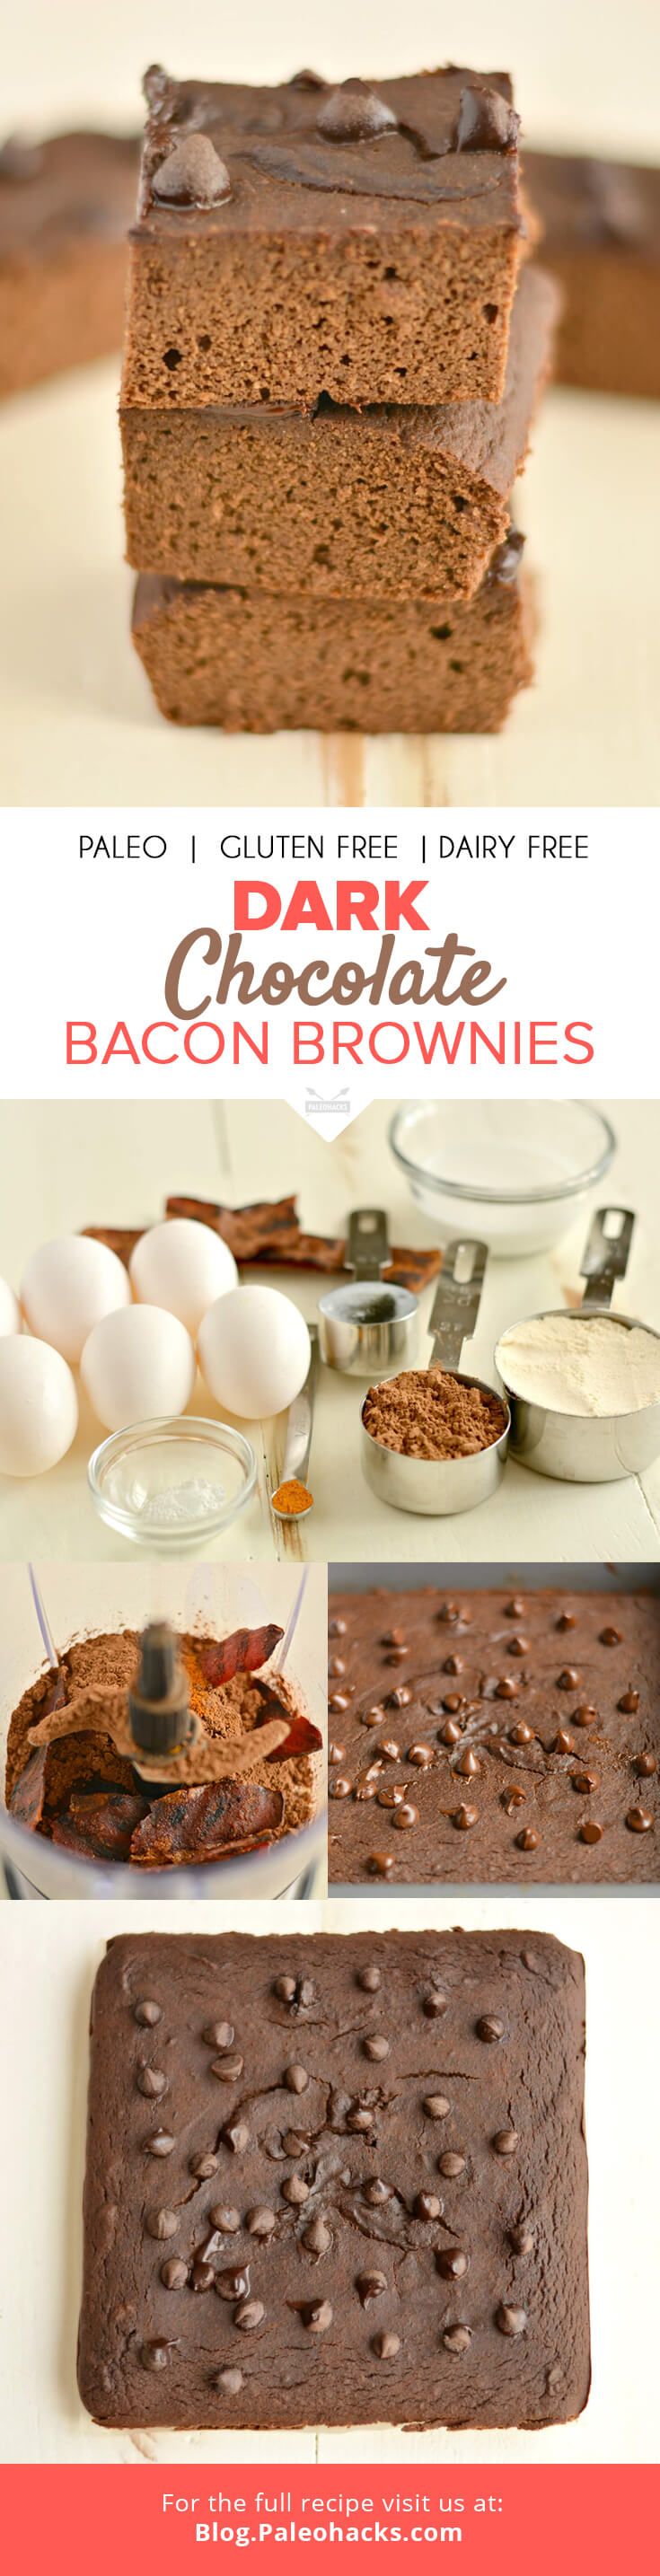 bacon brownies pin